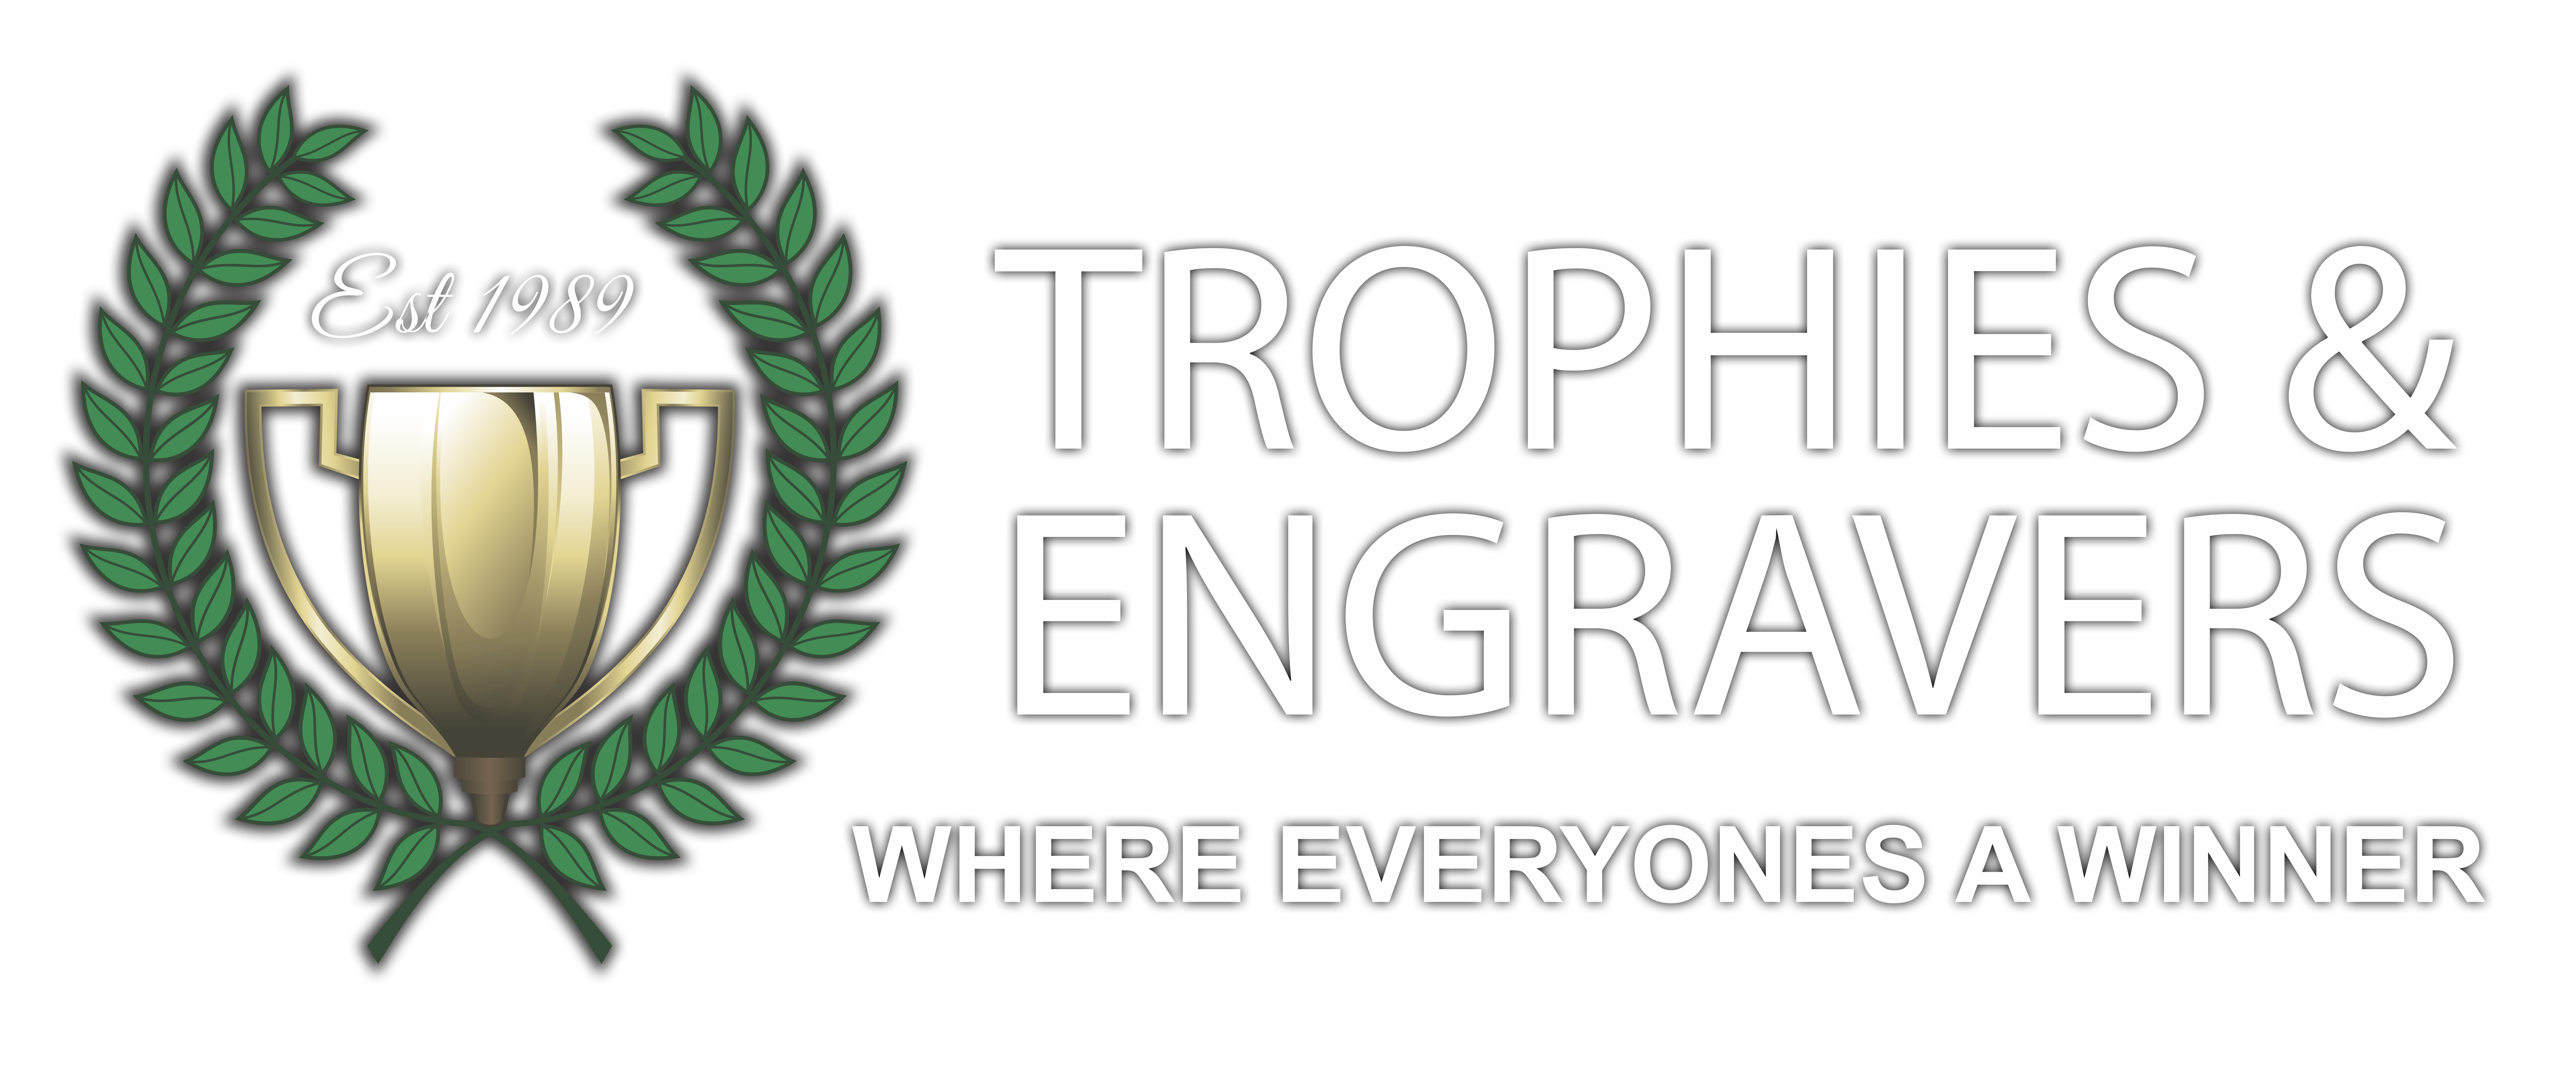 Trophies & Engravers